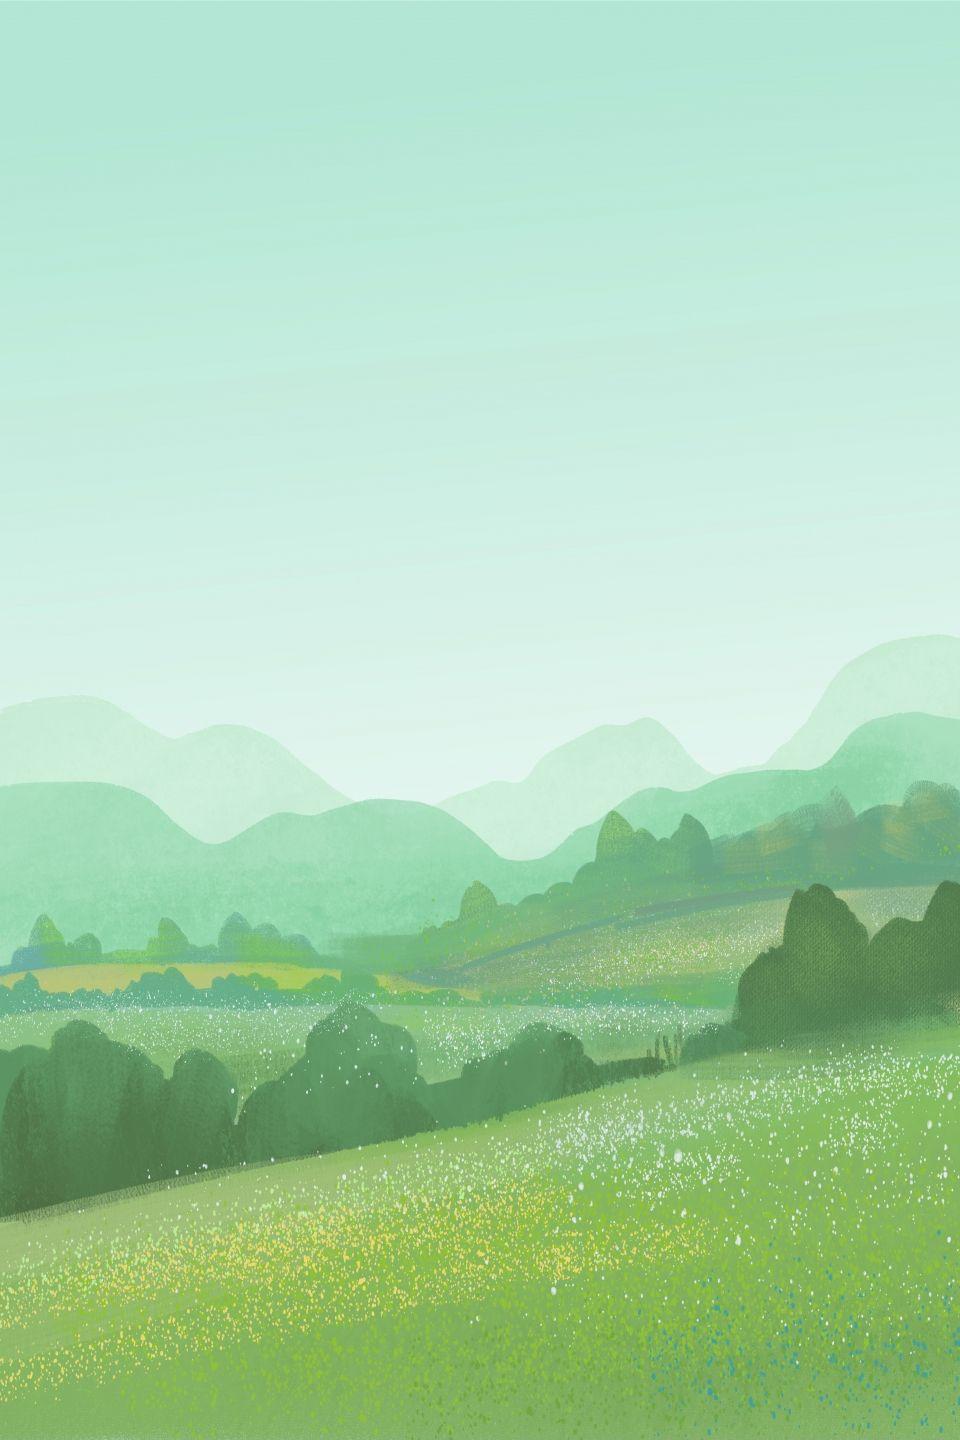 Spring Green Fresh H5 Background Wallpaper Image For